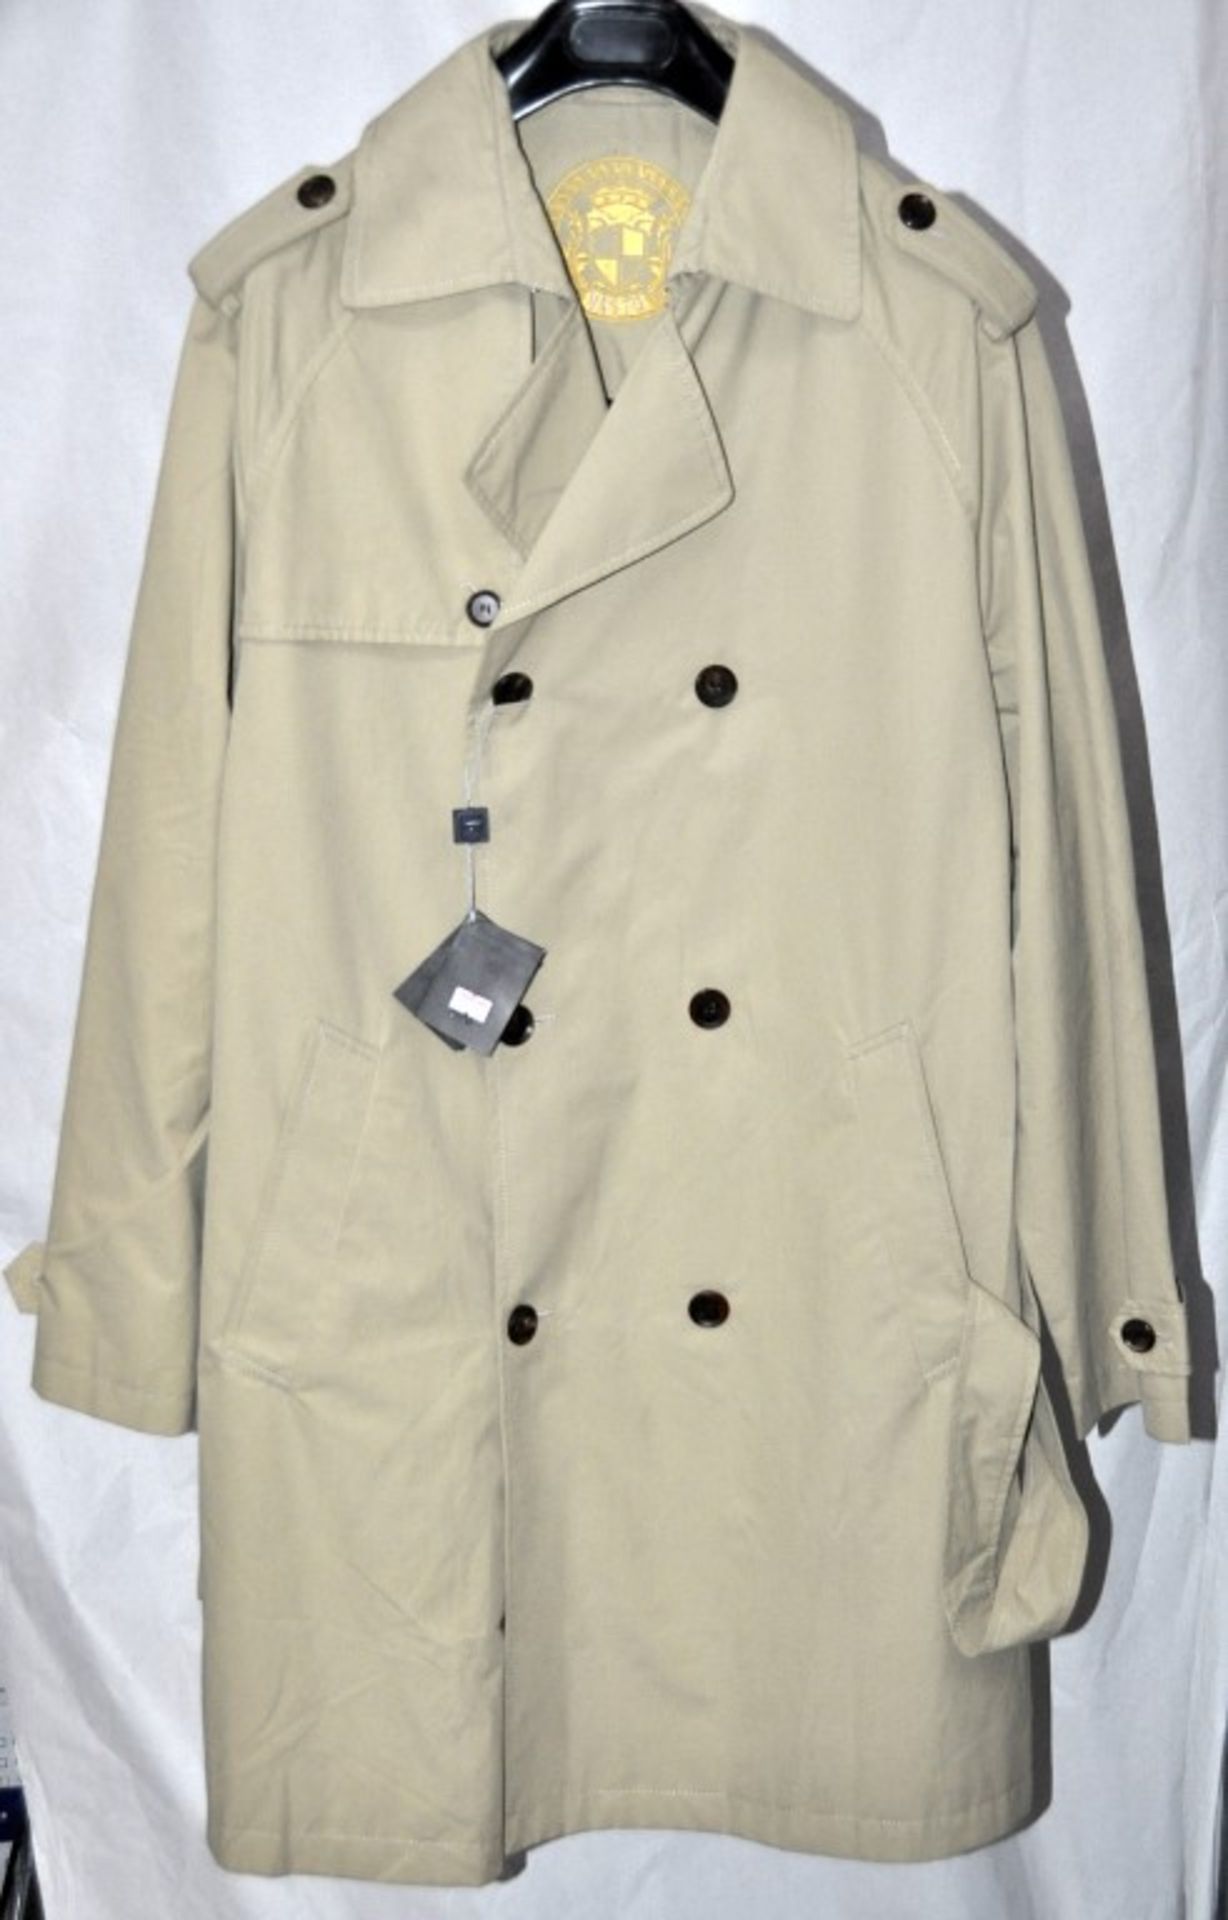 1 x Men's Trench Coat / Long Jacket By International Luxury Brand "Vasto" (BAD7107) – Size: